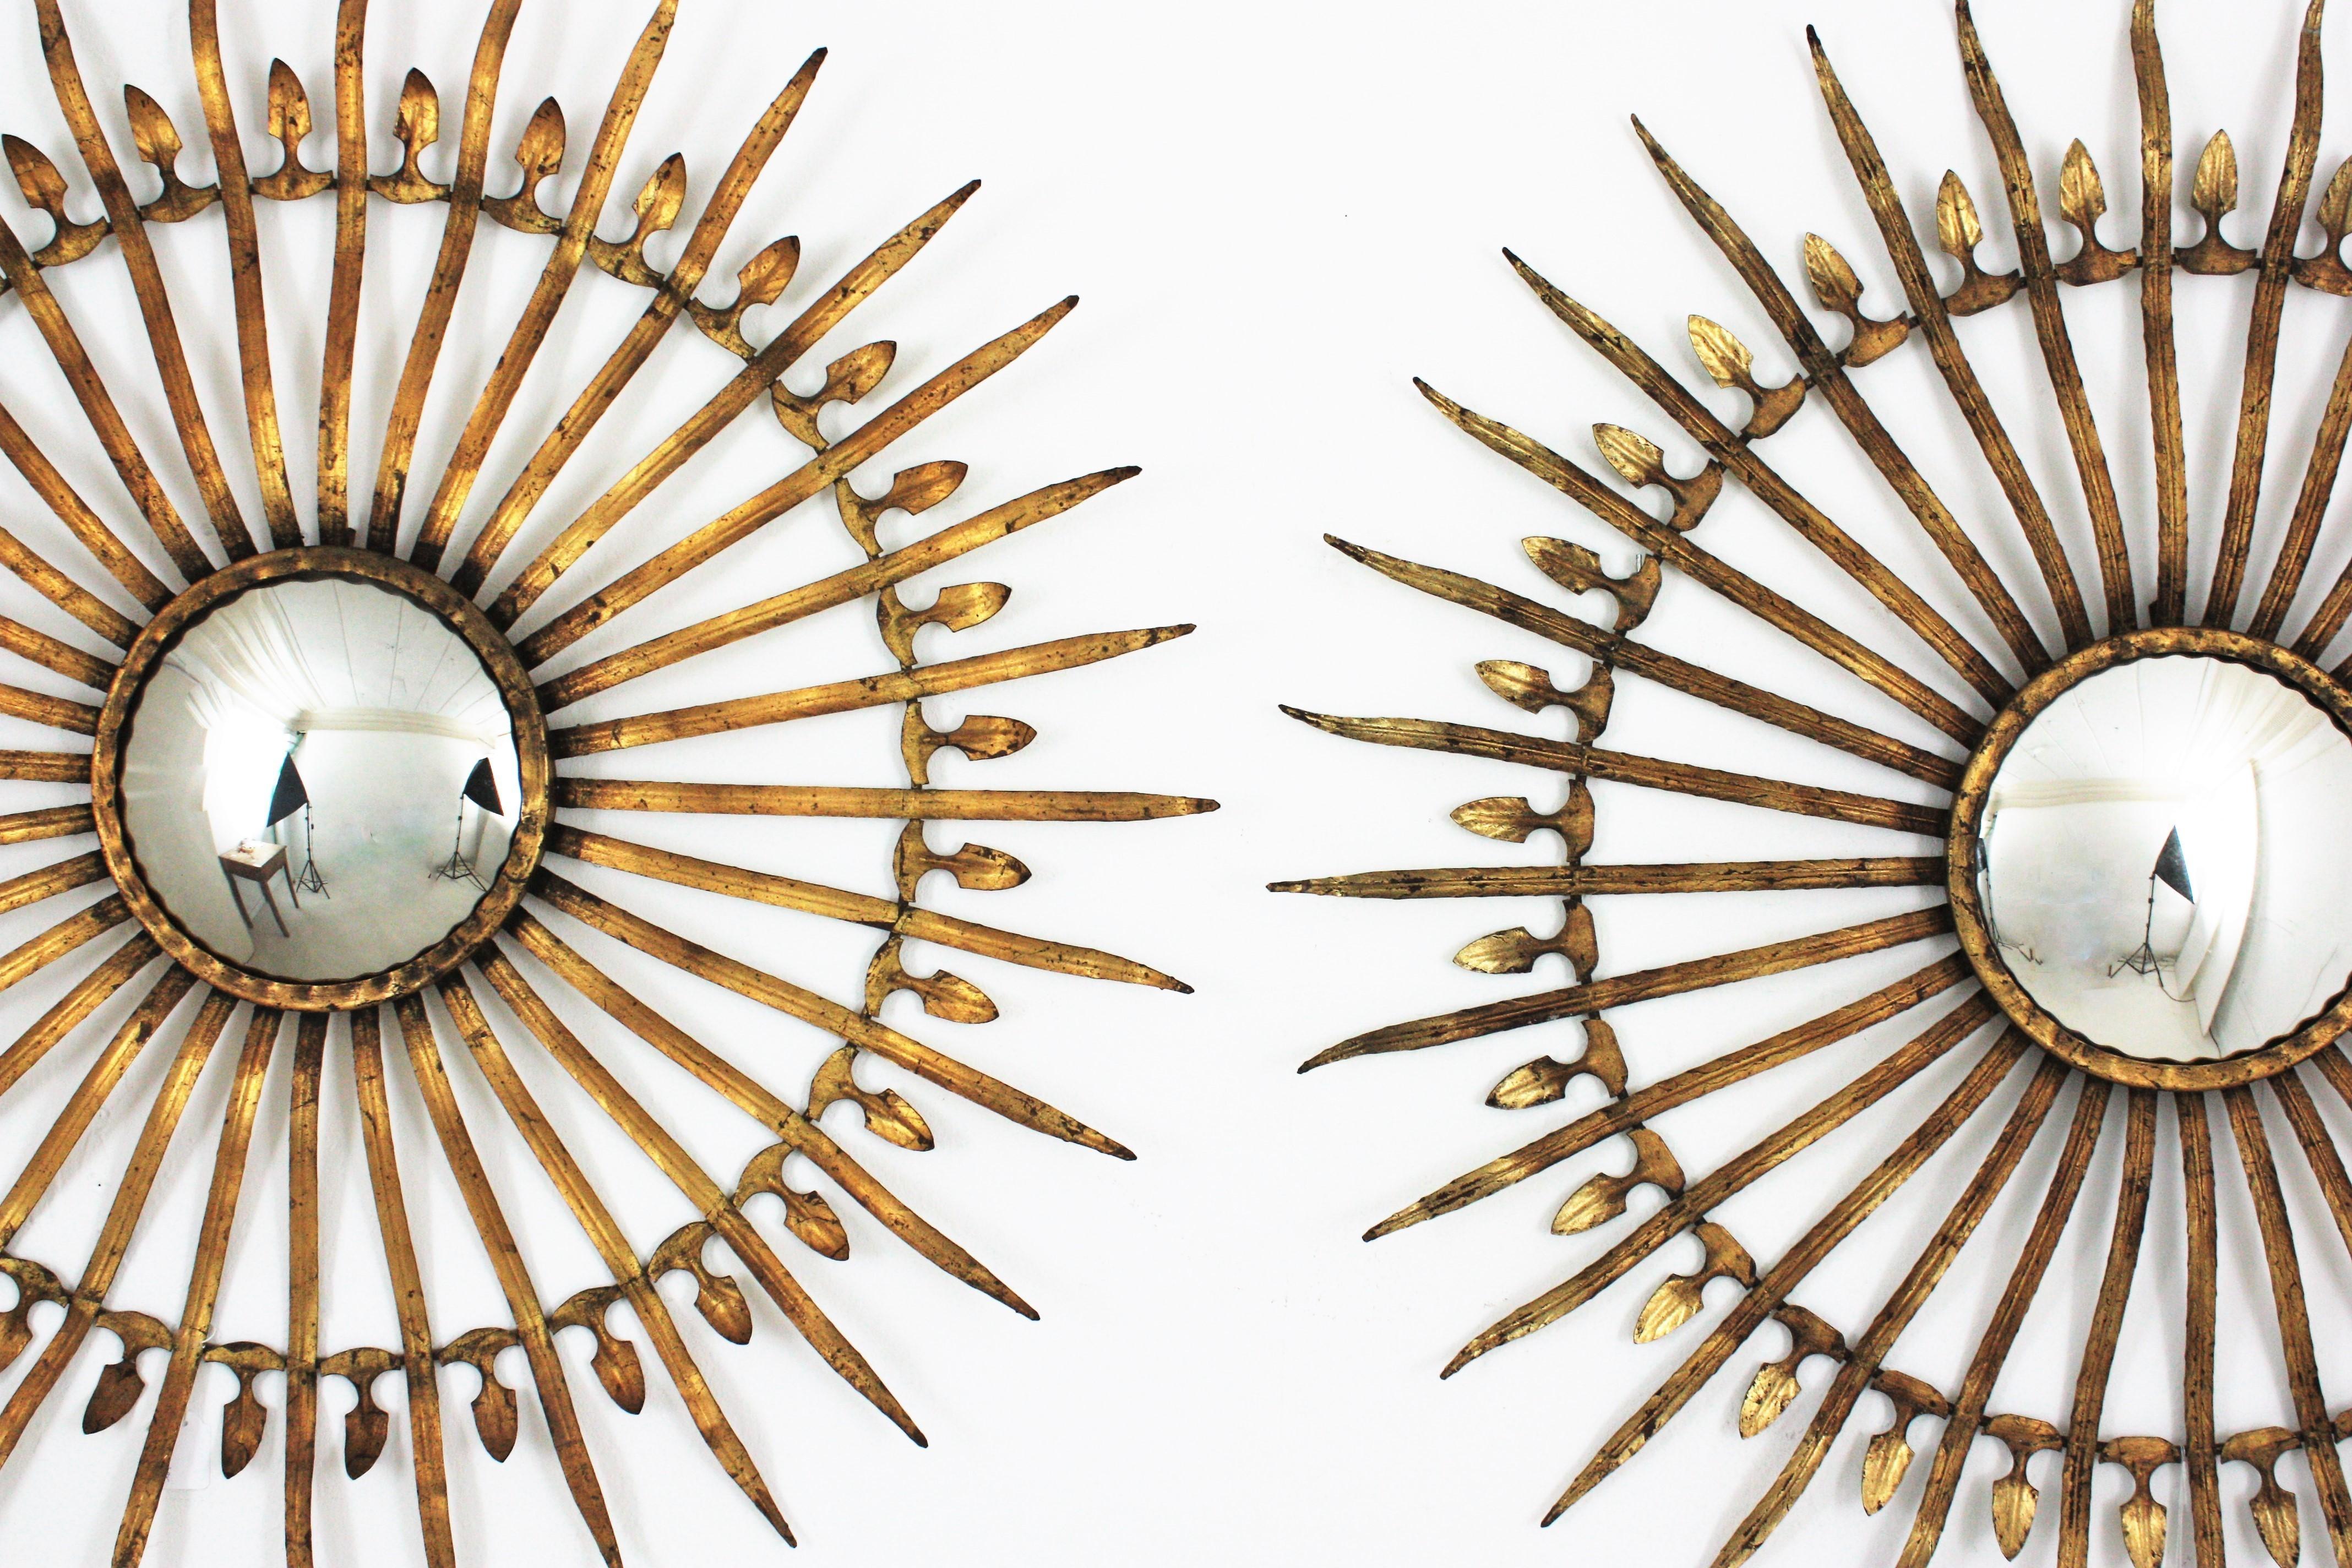 Spanish Pair of Sunburst Starburst Convex Mirrors in Gilt Iron, Large Scale